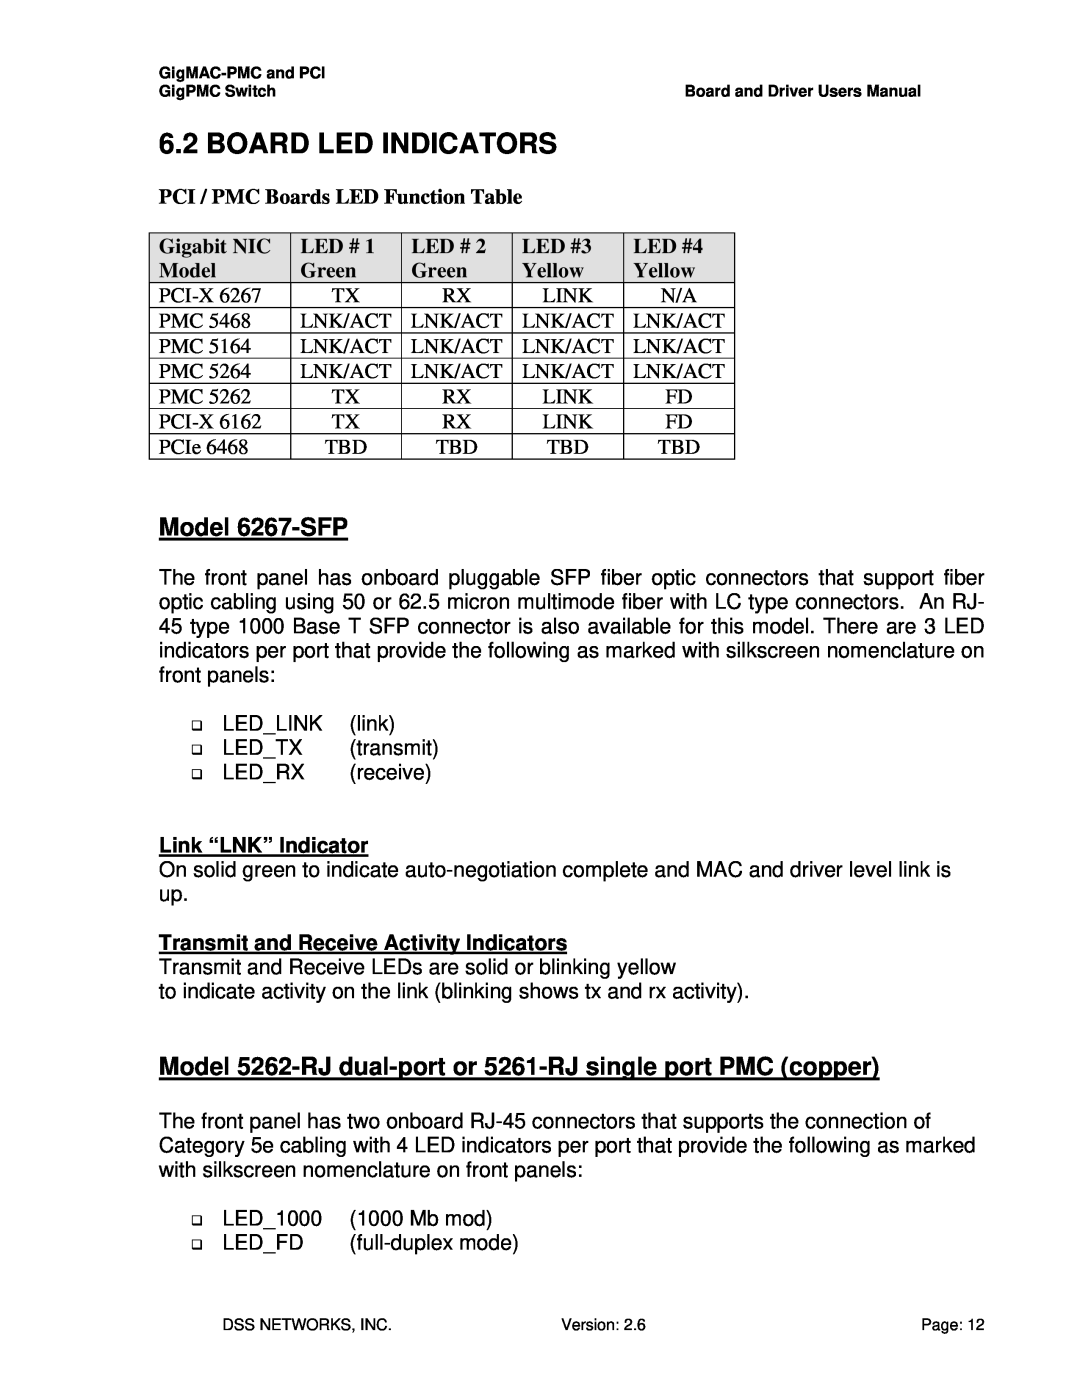 Intel PCI-X Board Led Indicators, Model 6267-SFP, Link “LNK” Indicator, Transmit and Receive Activity Indicators 